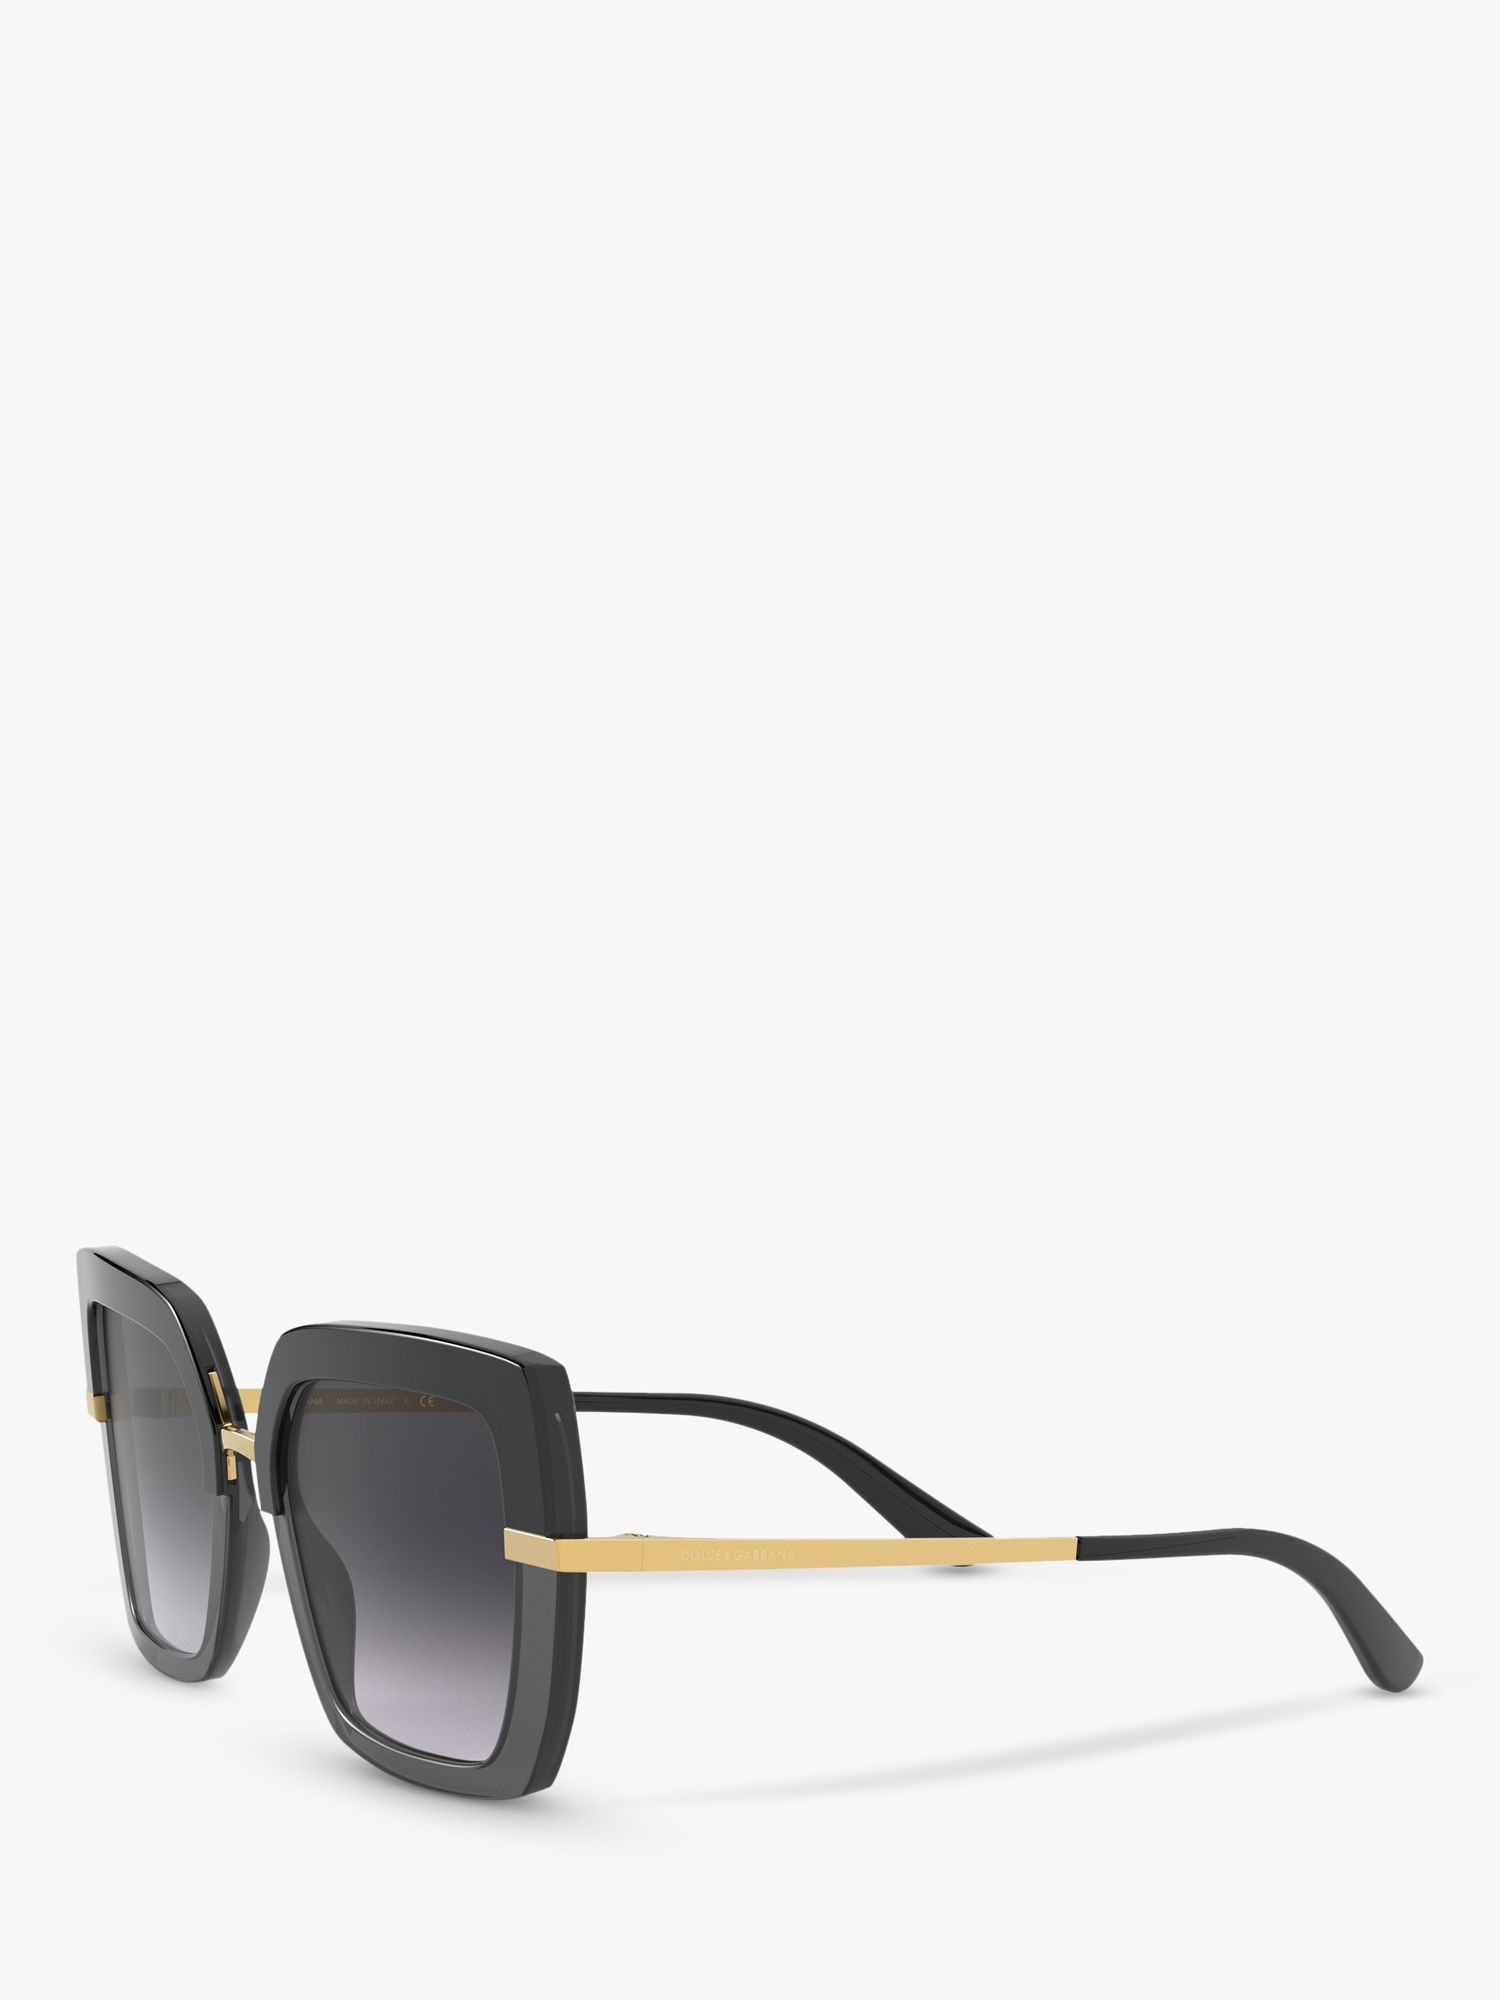 Dolce & Gabbana DG4373 Women's Square Sunglasses, Black/Grey Gradient ...